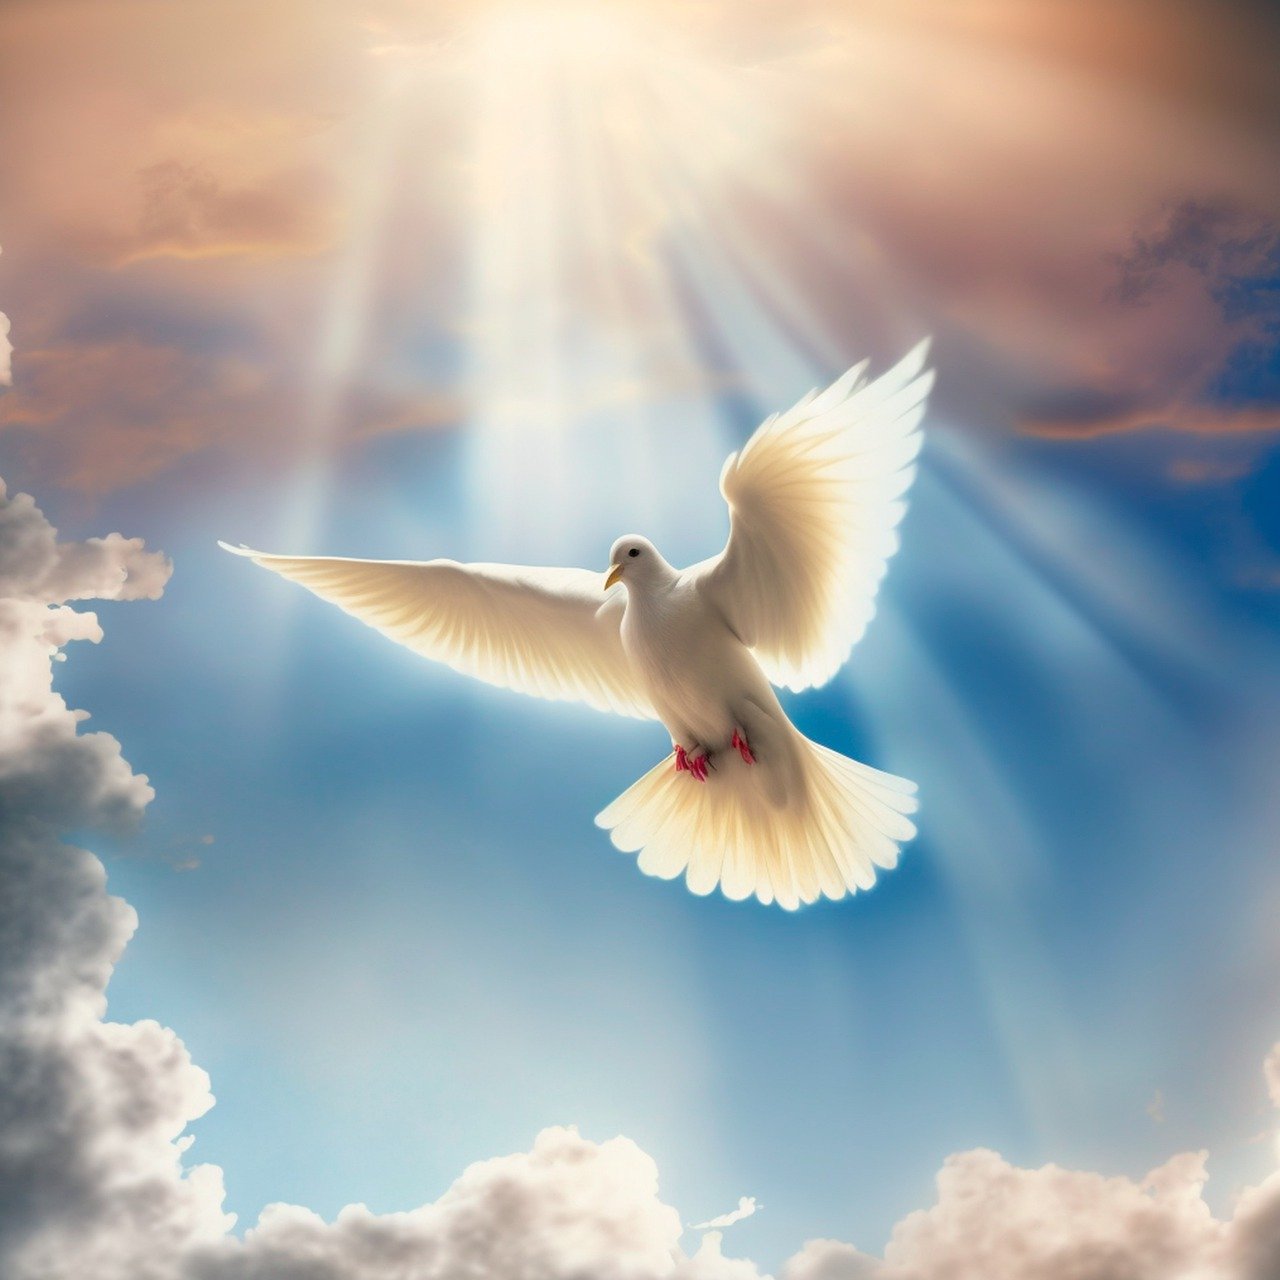 Dove represents the Holy Spirit